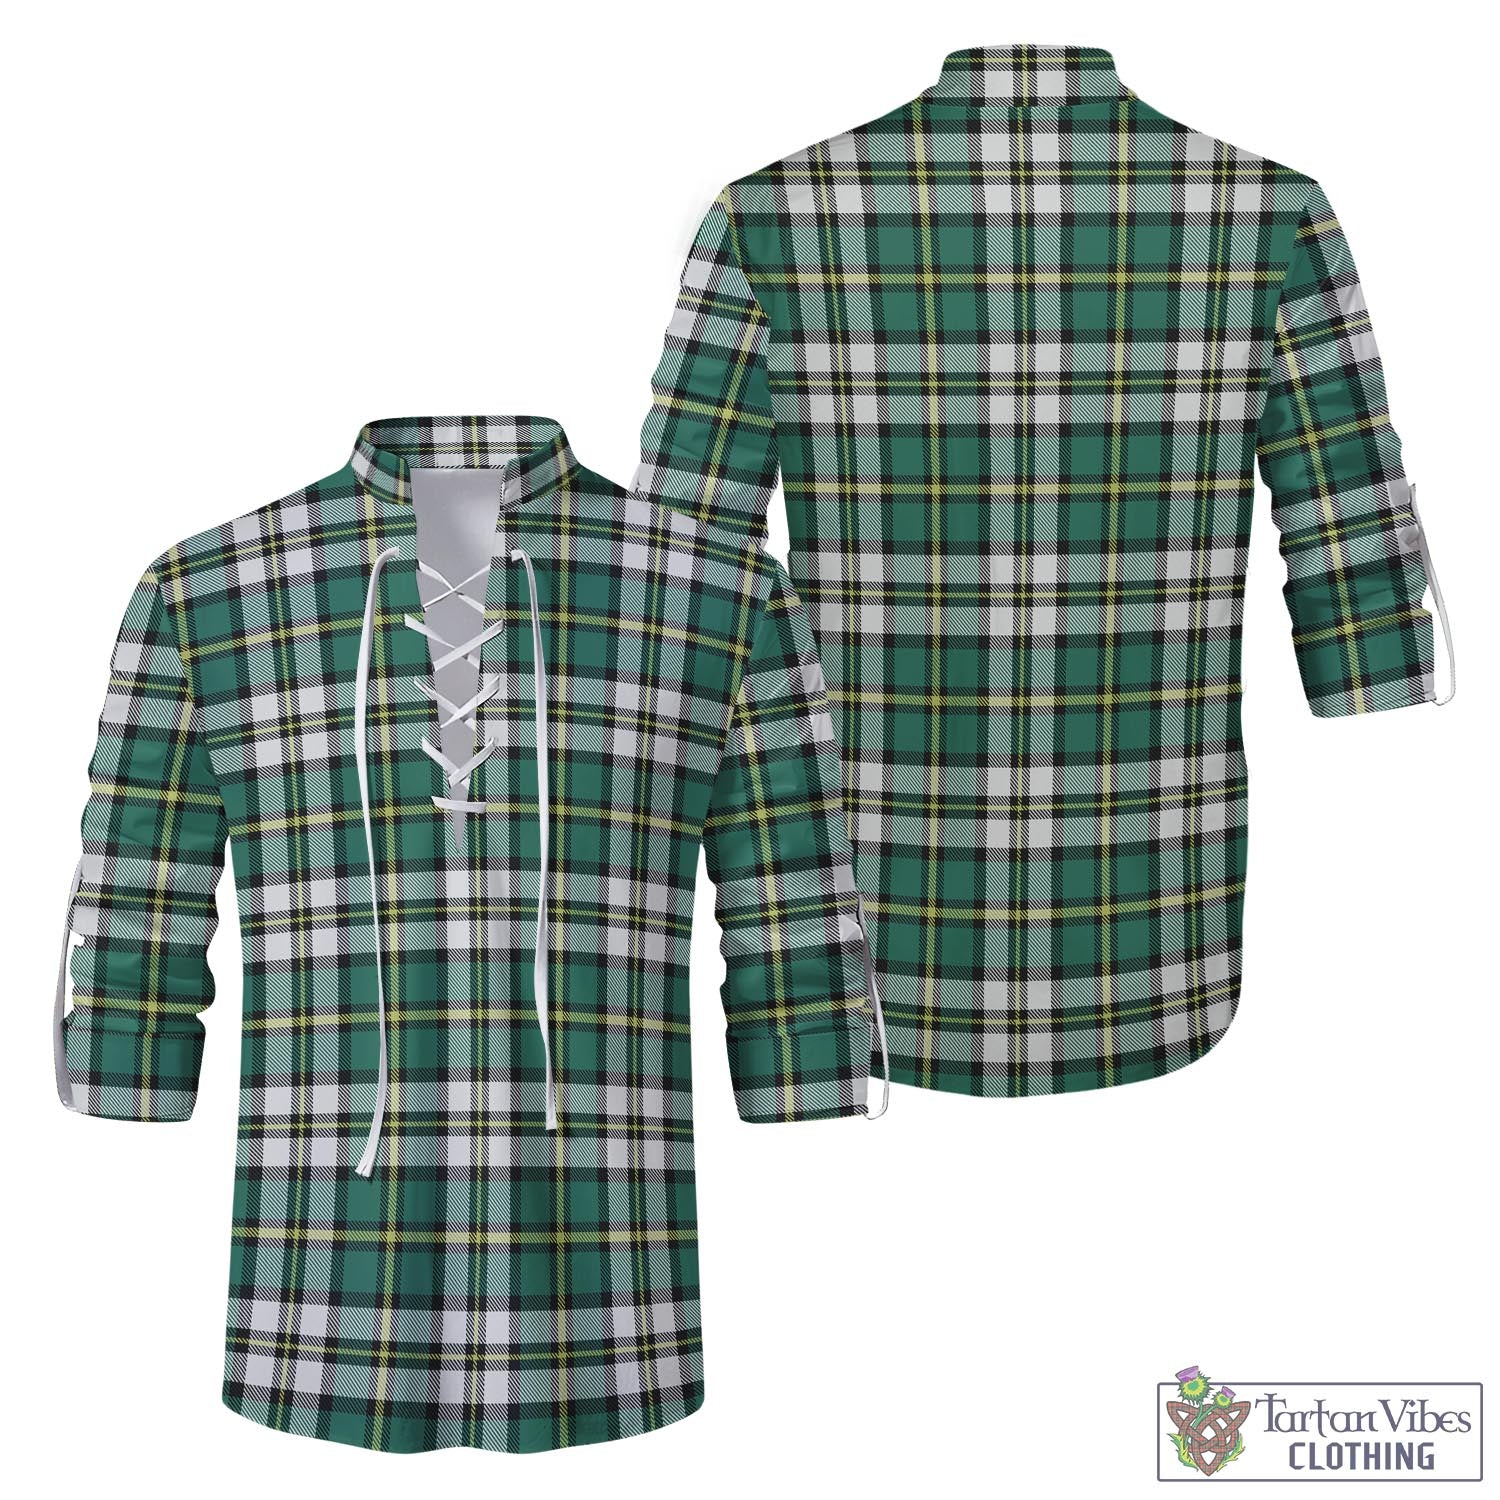 Tartan Vibes Clothing Cape Breton Island Canada Tartan Men's Scottish Traditional Jacobite Ghillie Kilt Shirt